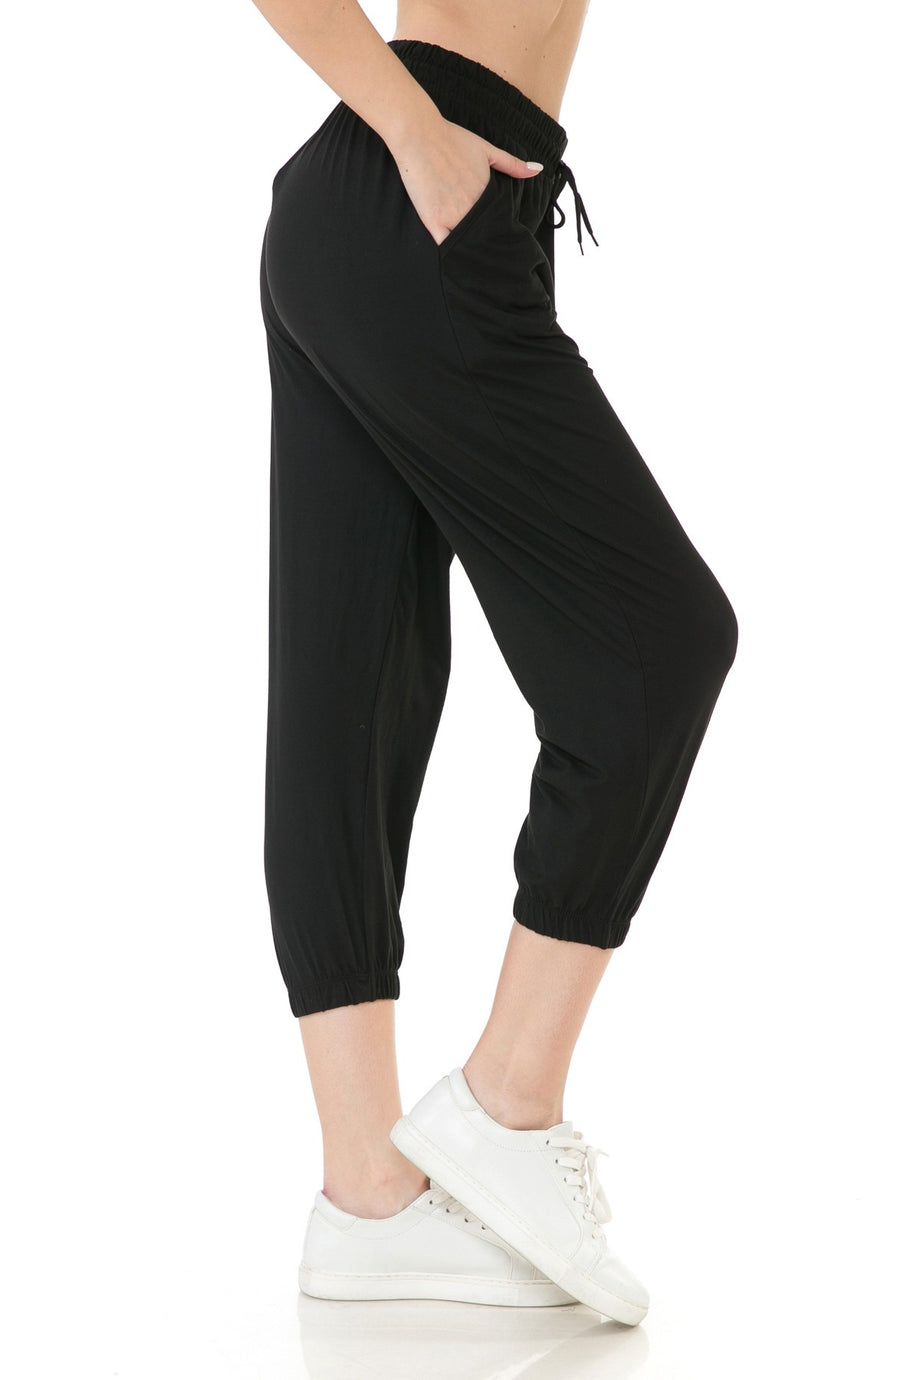 Capri Pants for Women Loose Workout Yoga Cropped Joggers